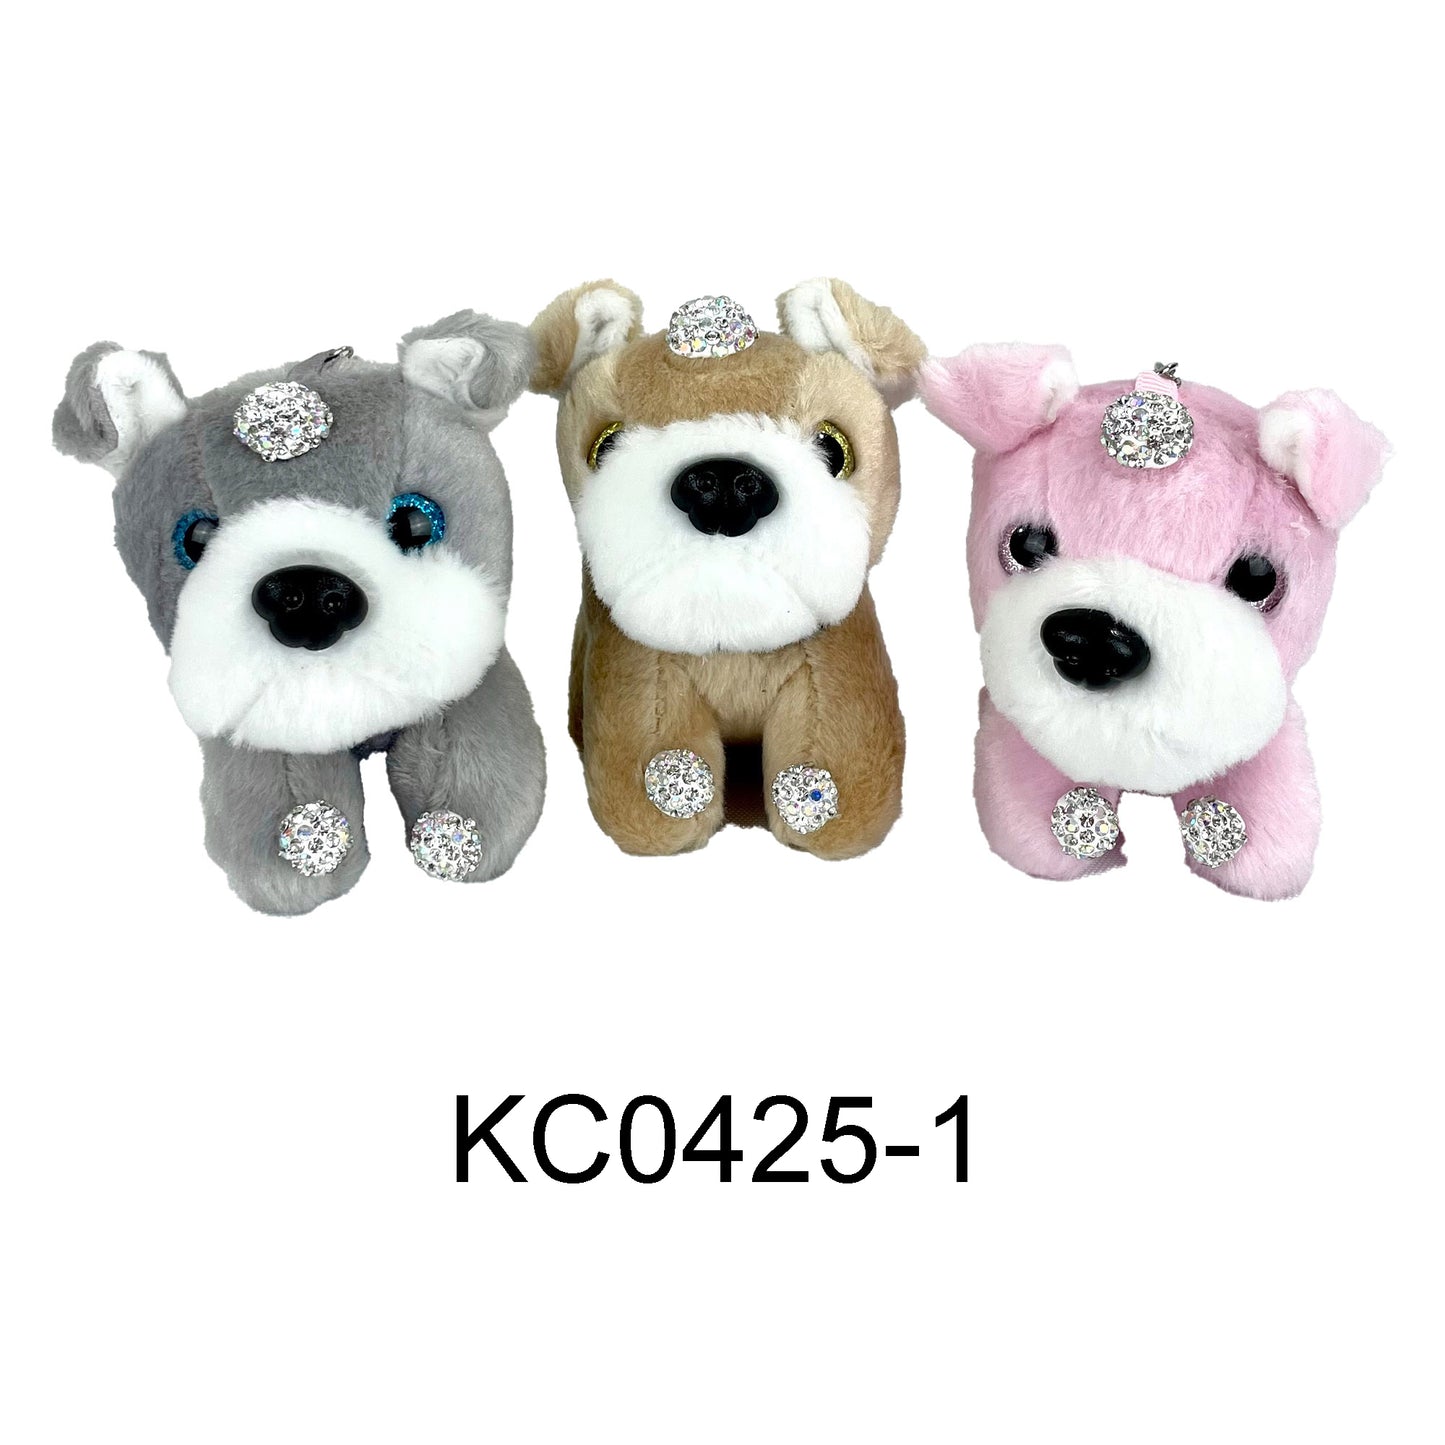 RHINESTONE DOG PLUSH KEY CHAIN 0425-1 (12PC)